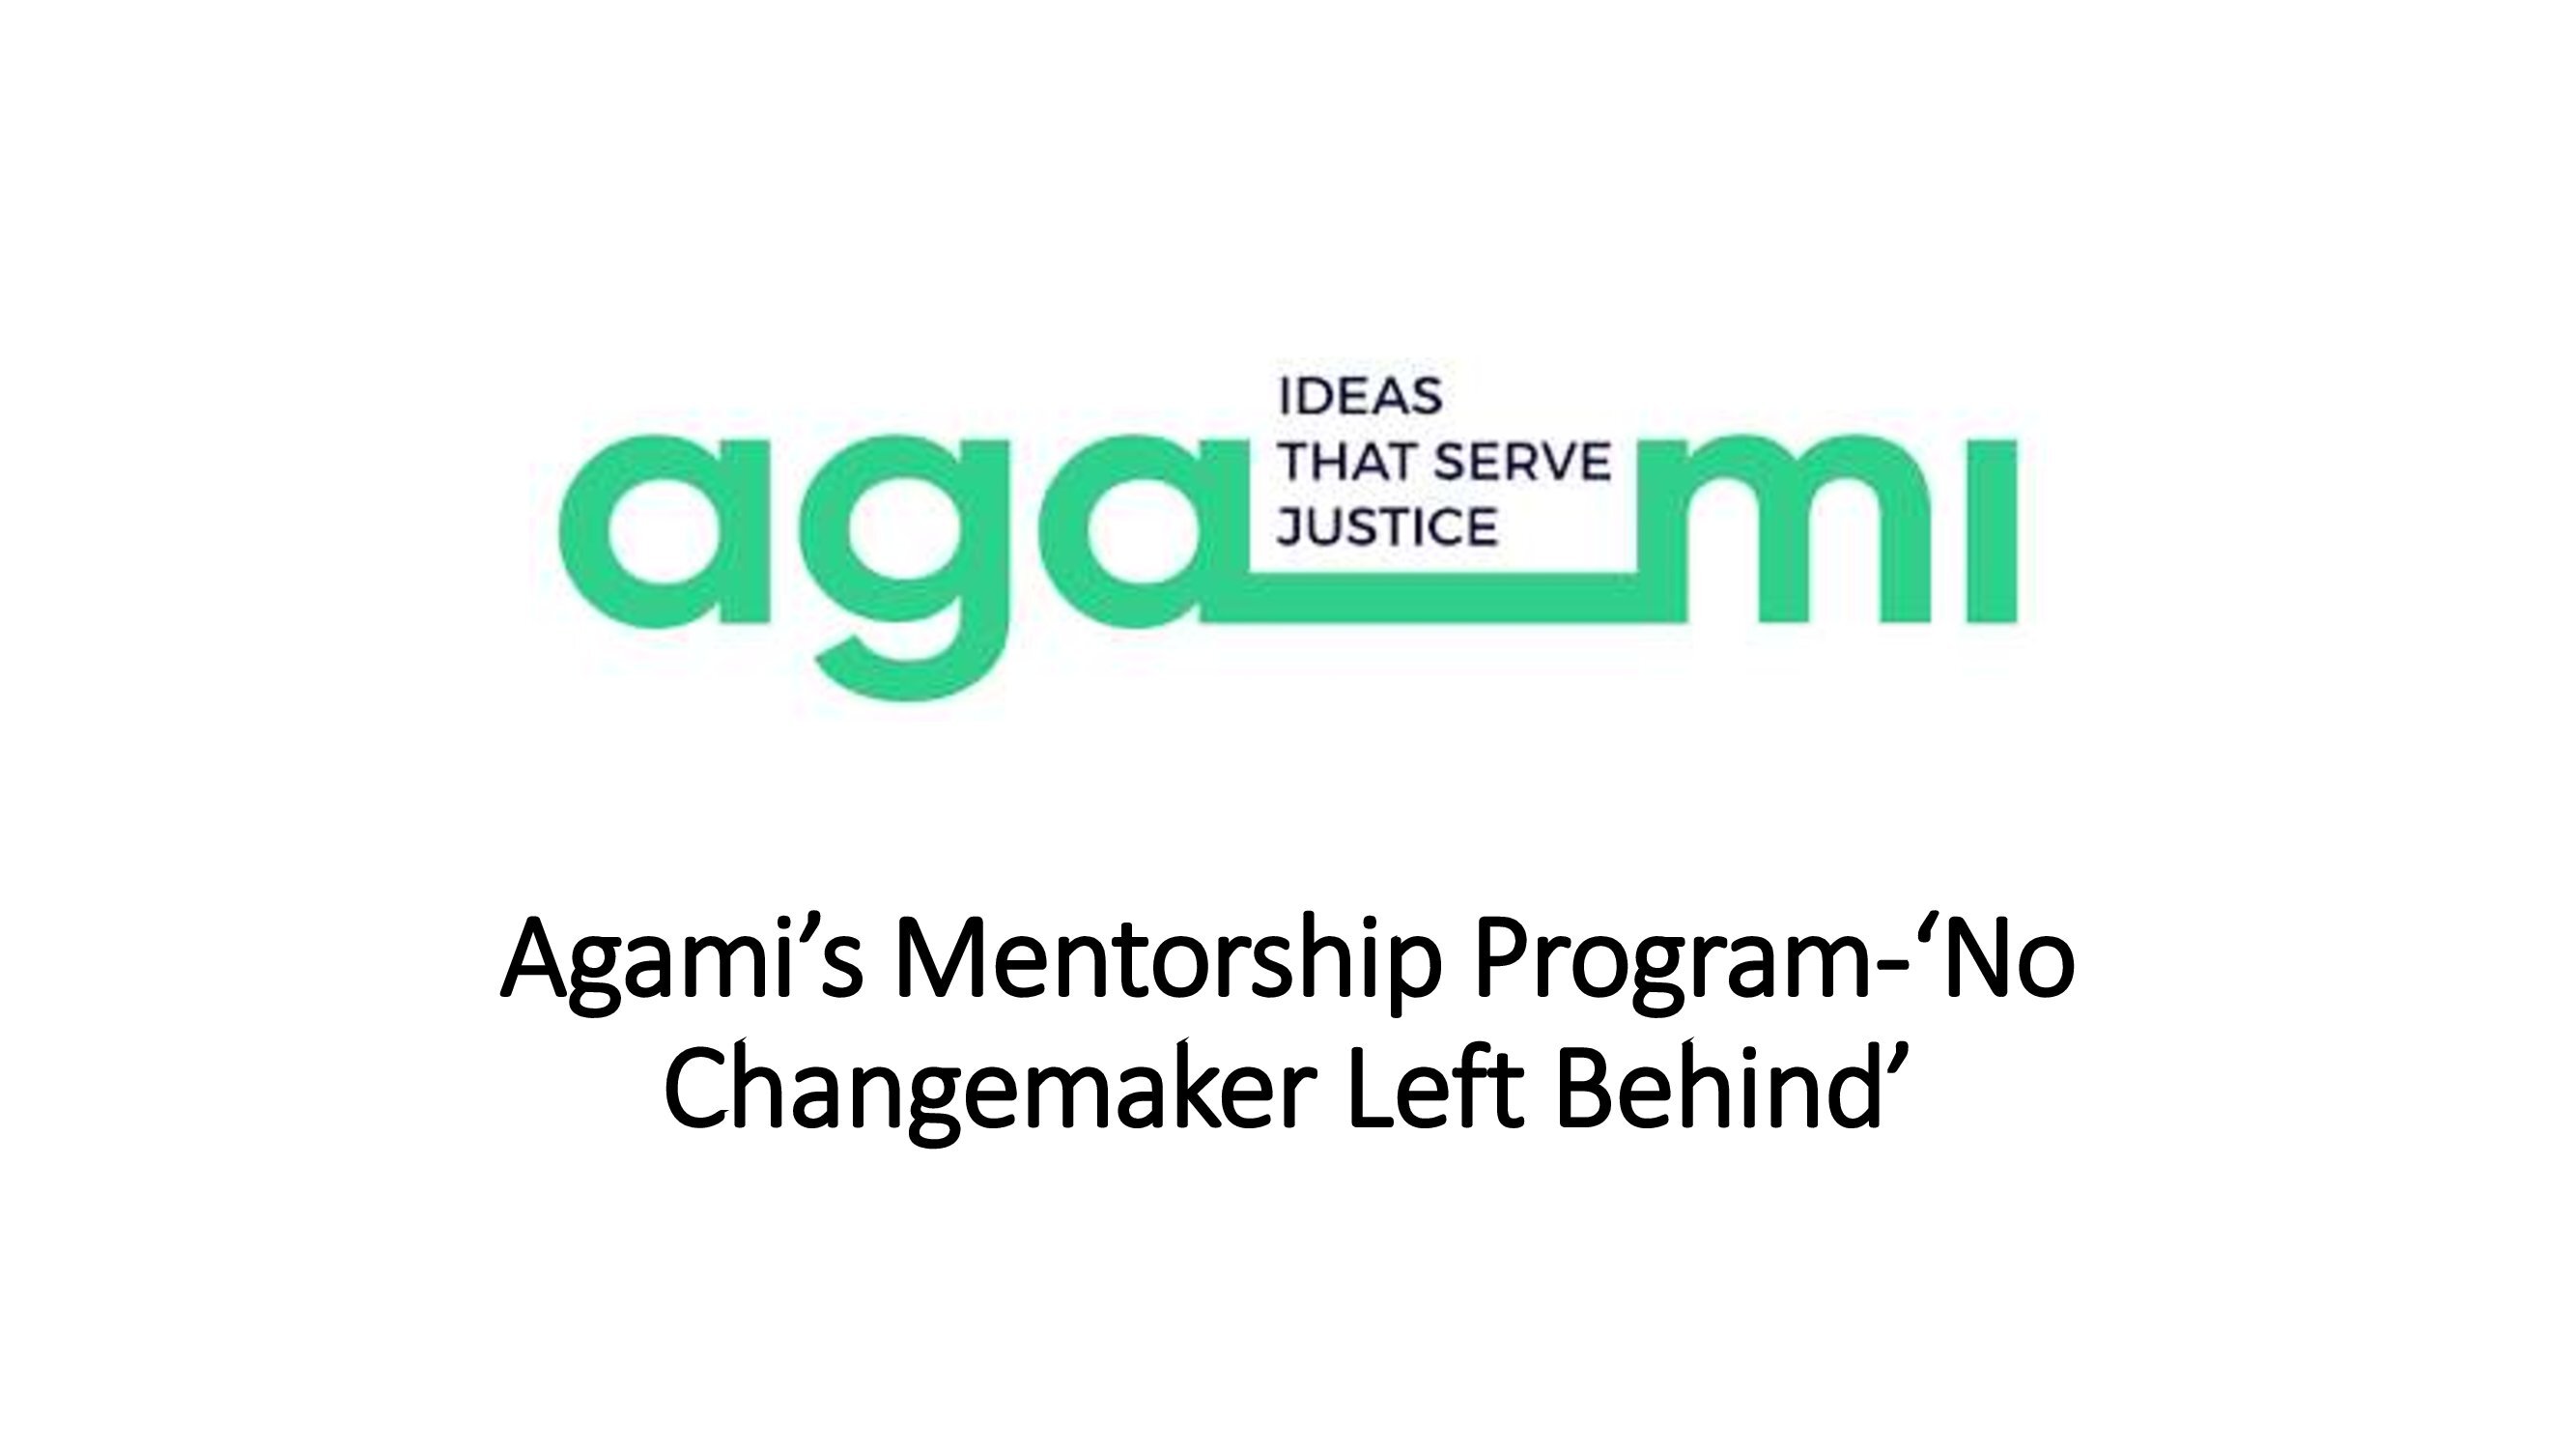 Agami’s Mentorship Program-‘No Changemaker Left Behind’